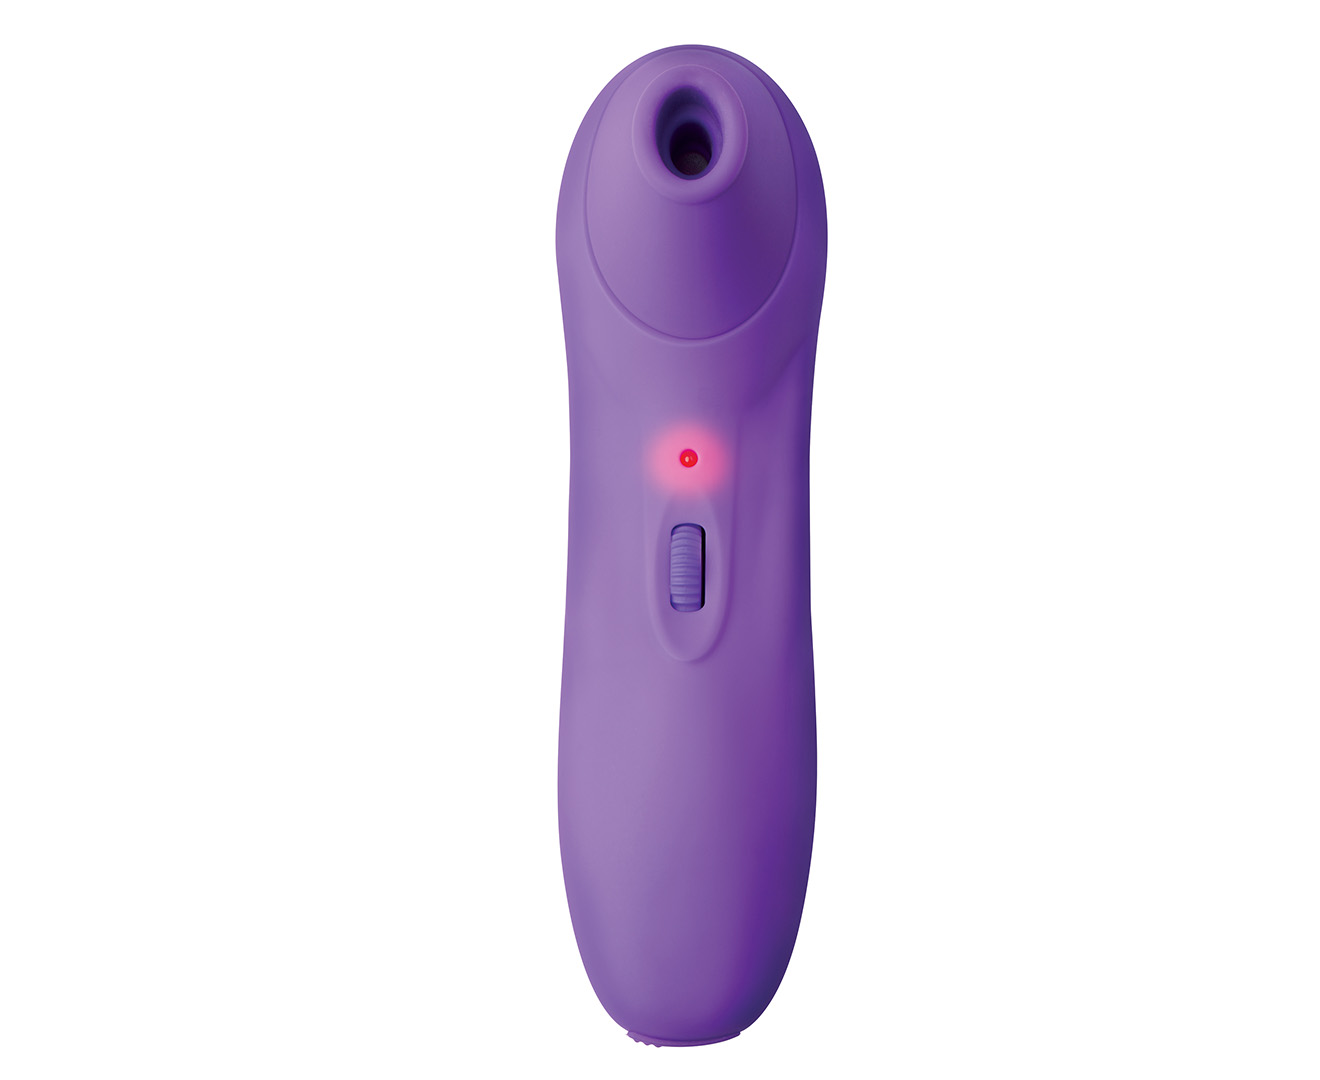 Inmi Shegasm Focused Clitoral Stimulator Purple Nz